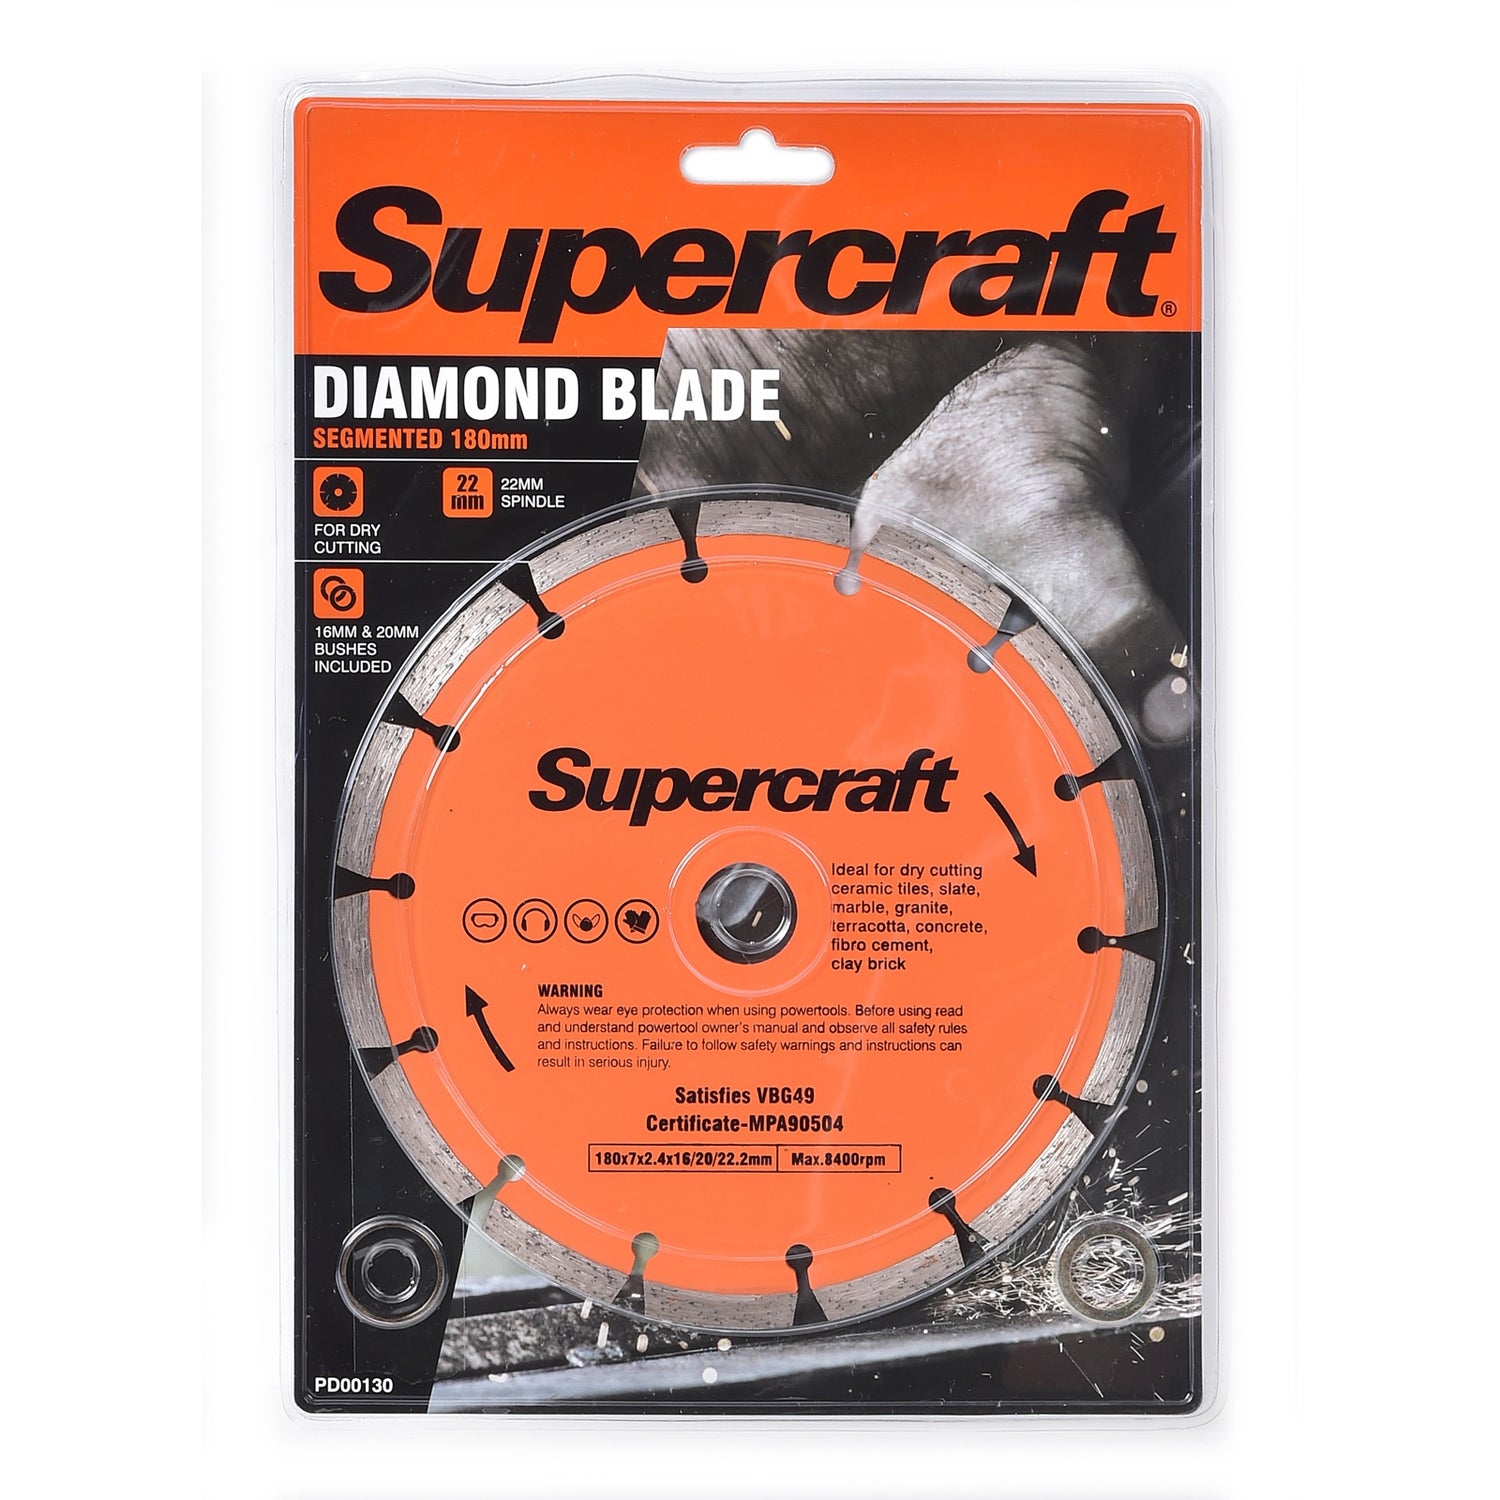 Supercraft Blade Diamond Segment 180mm